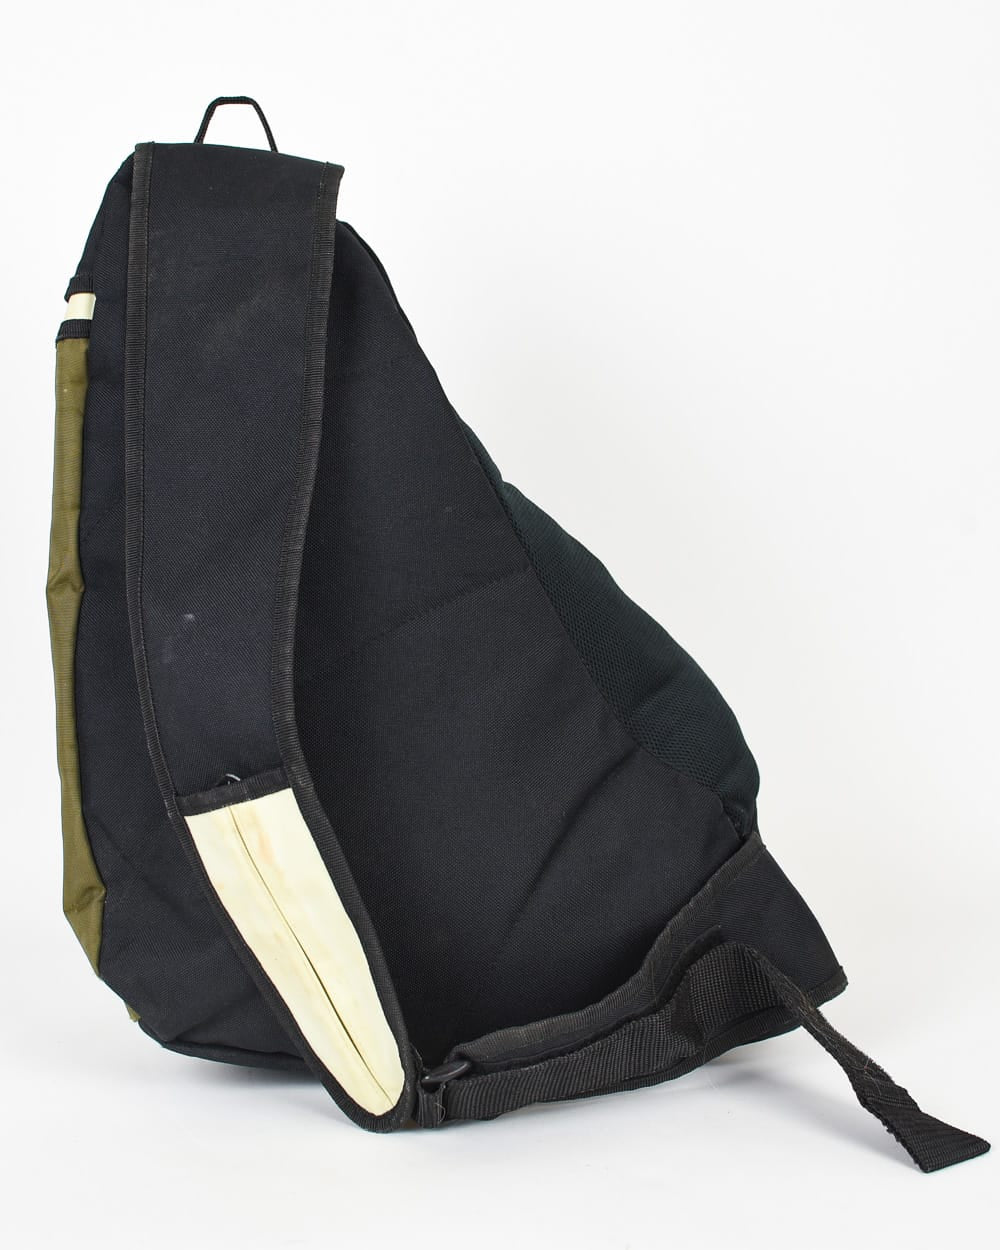  Nike Sling Crossbody Bag